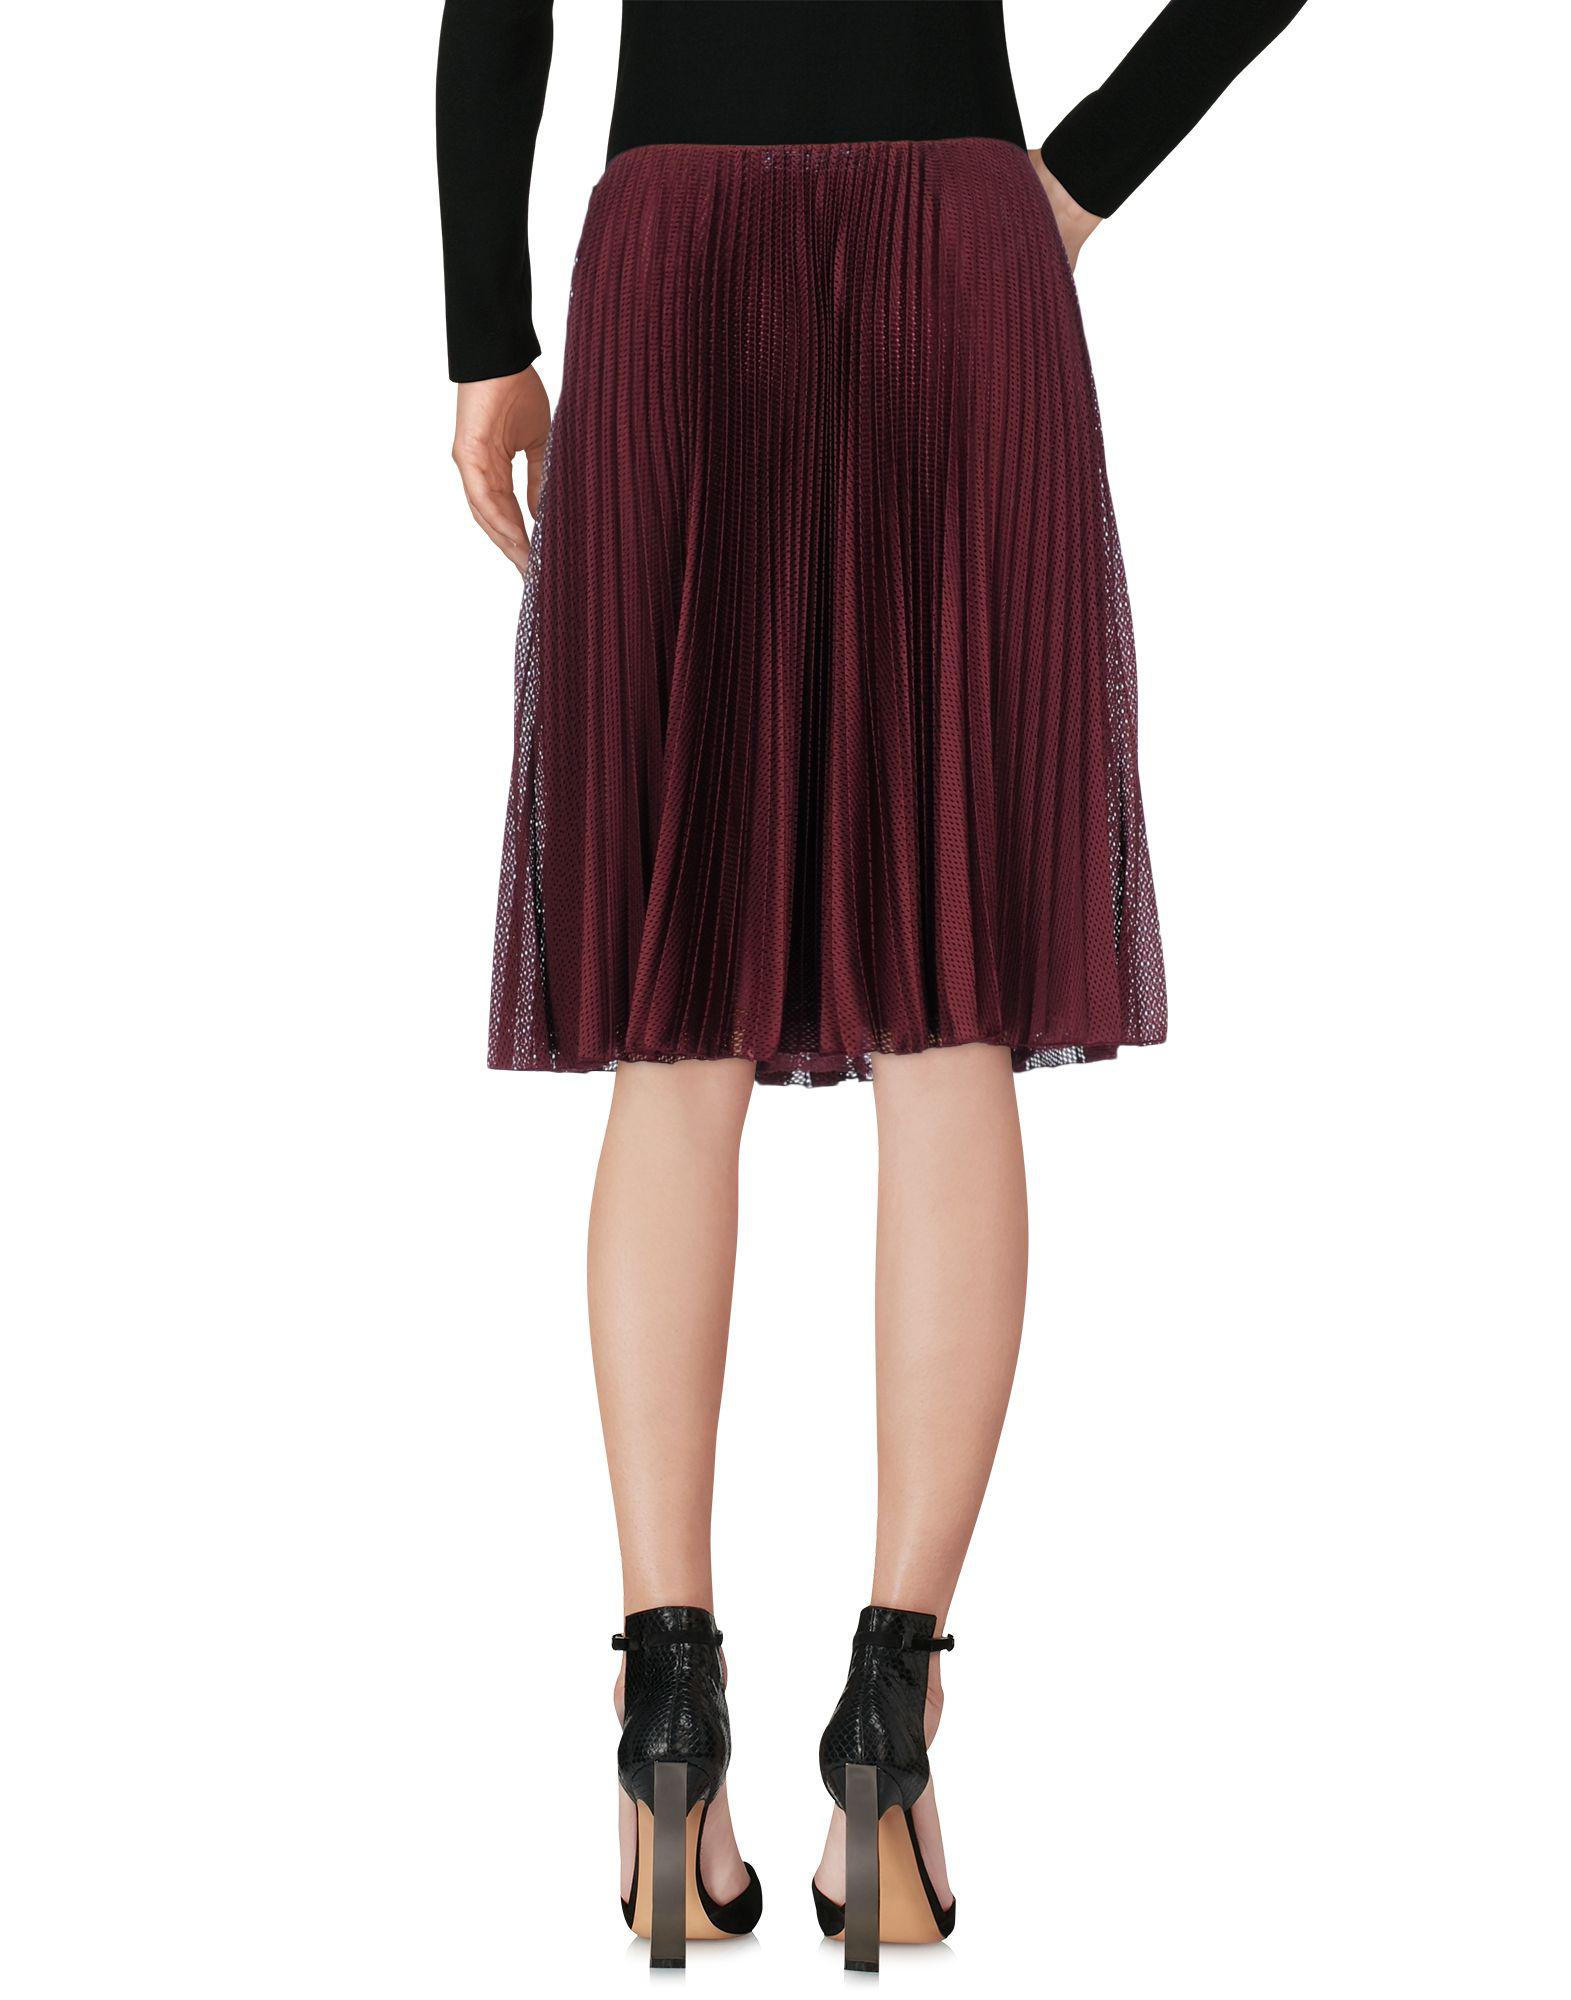 Prada Silk Knee Length Skirt in Purple - Lyst